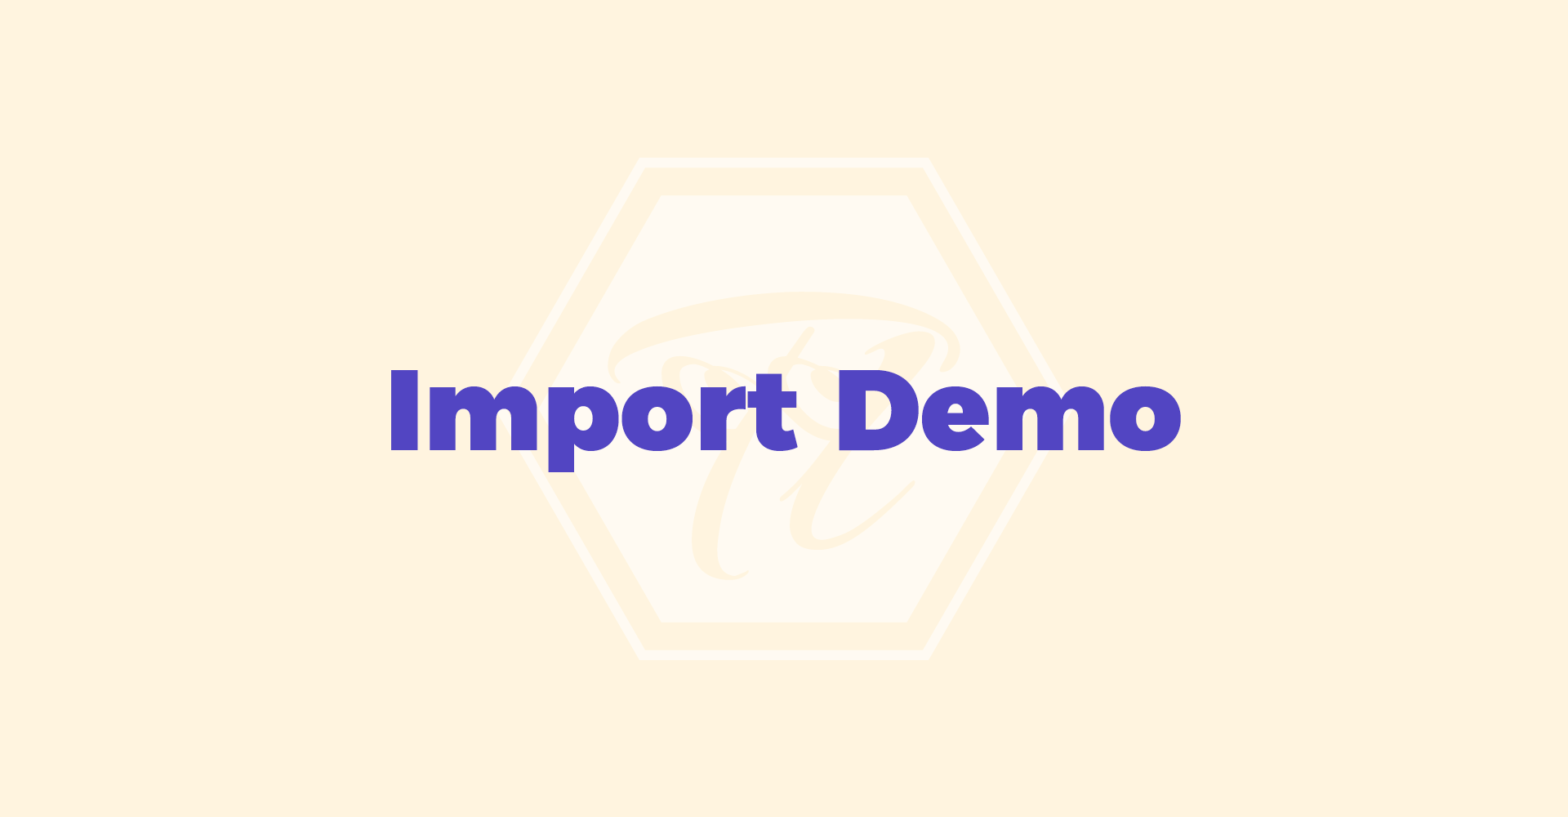 import_demo 2 1568x817